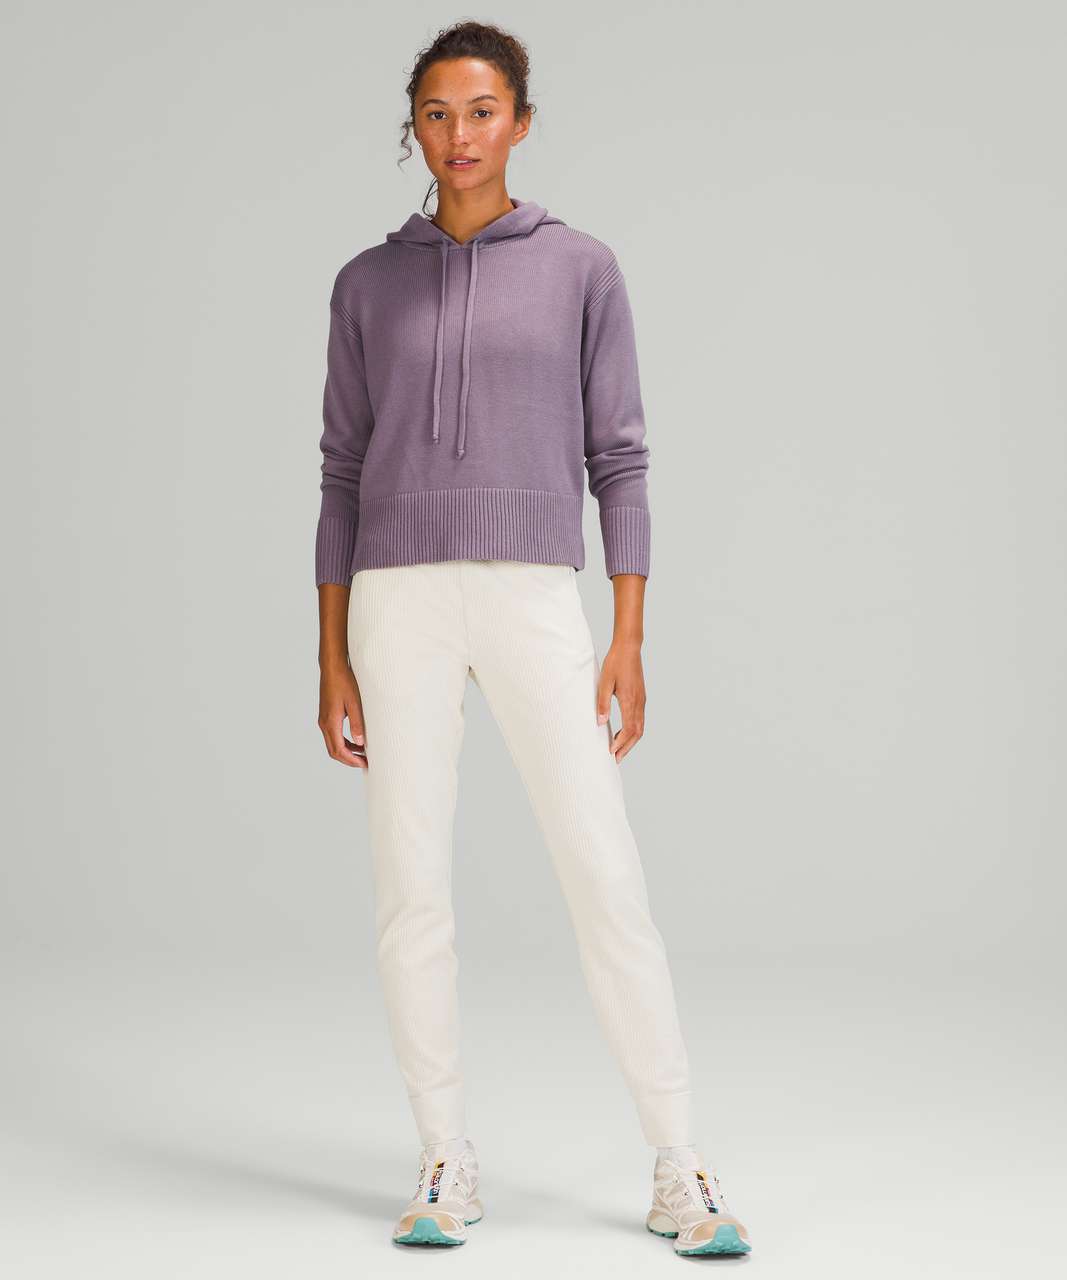 Lululemon Double Knit Sweater Hoodie - Dusky Lavender